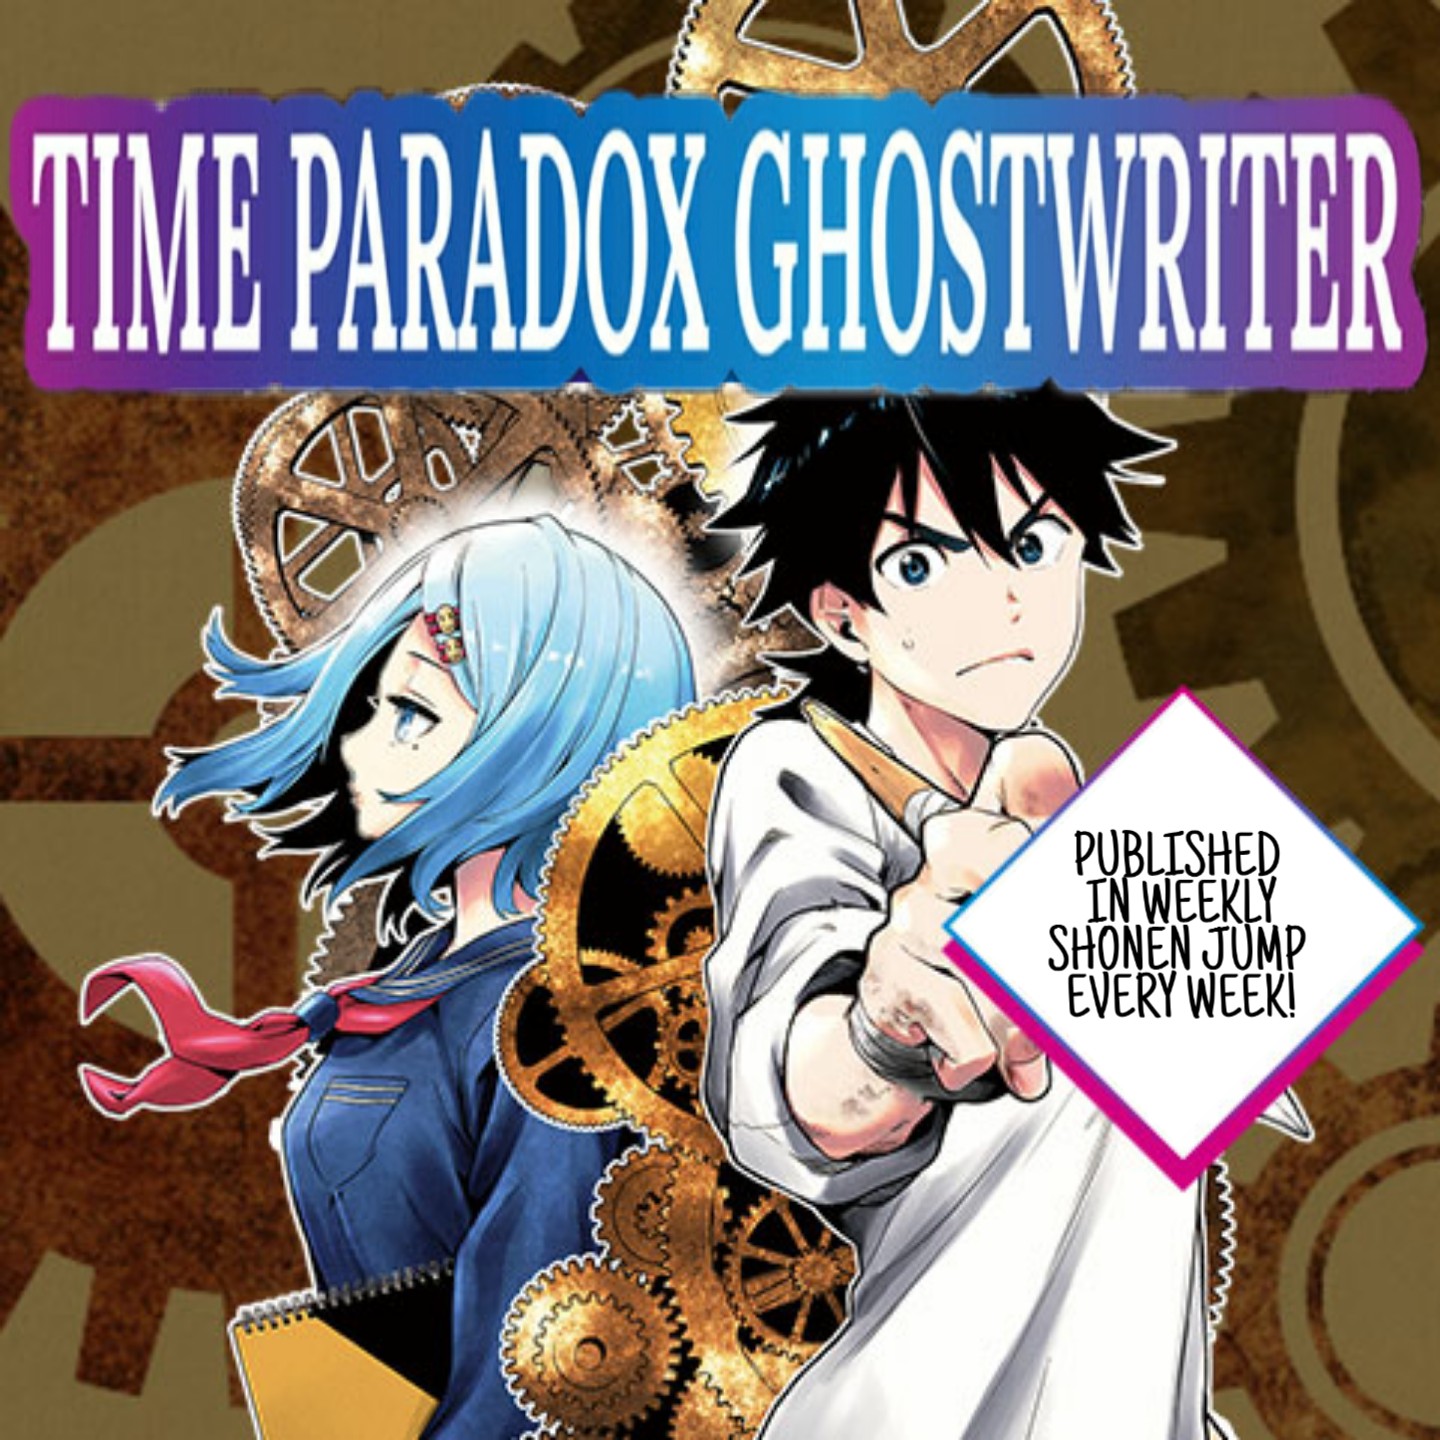 Time Paradox Ghostwriter Wiki